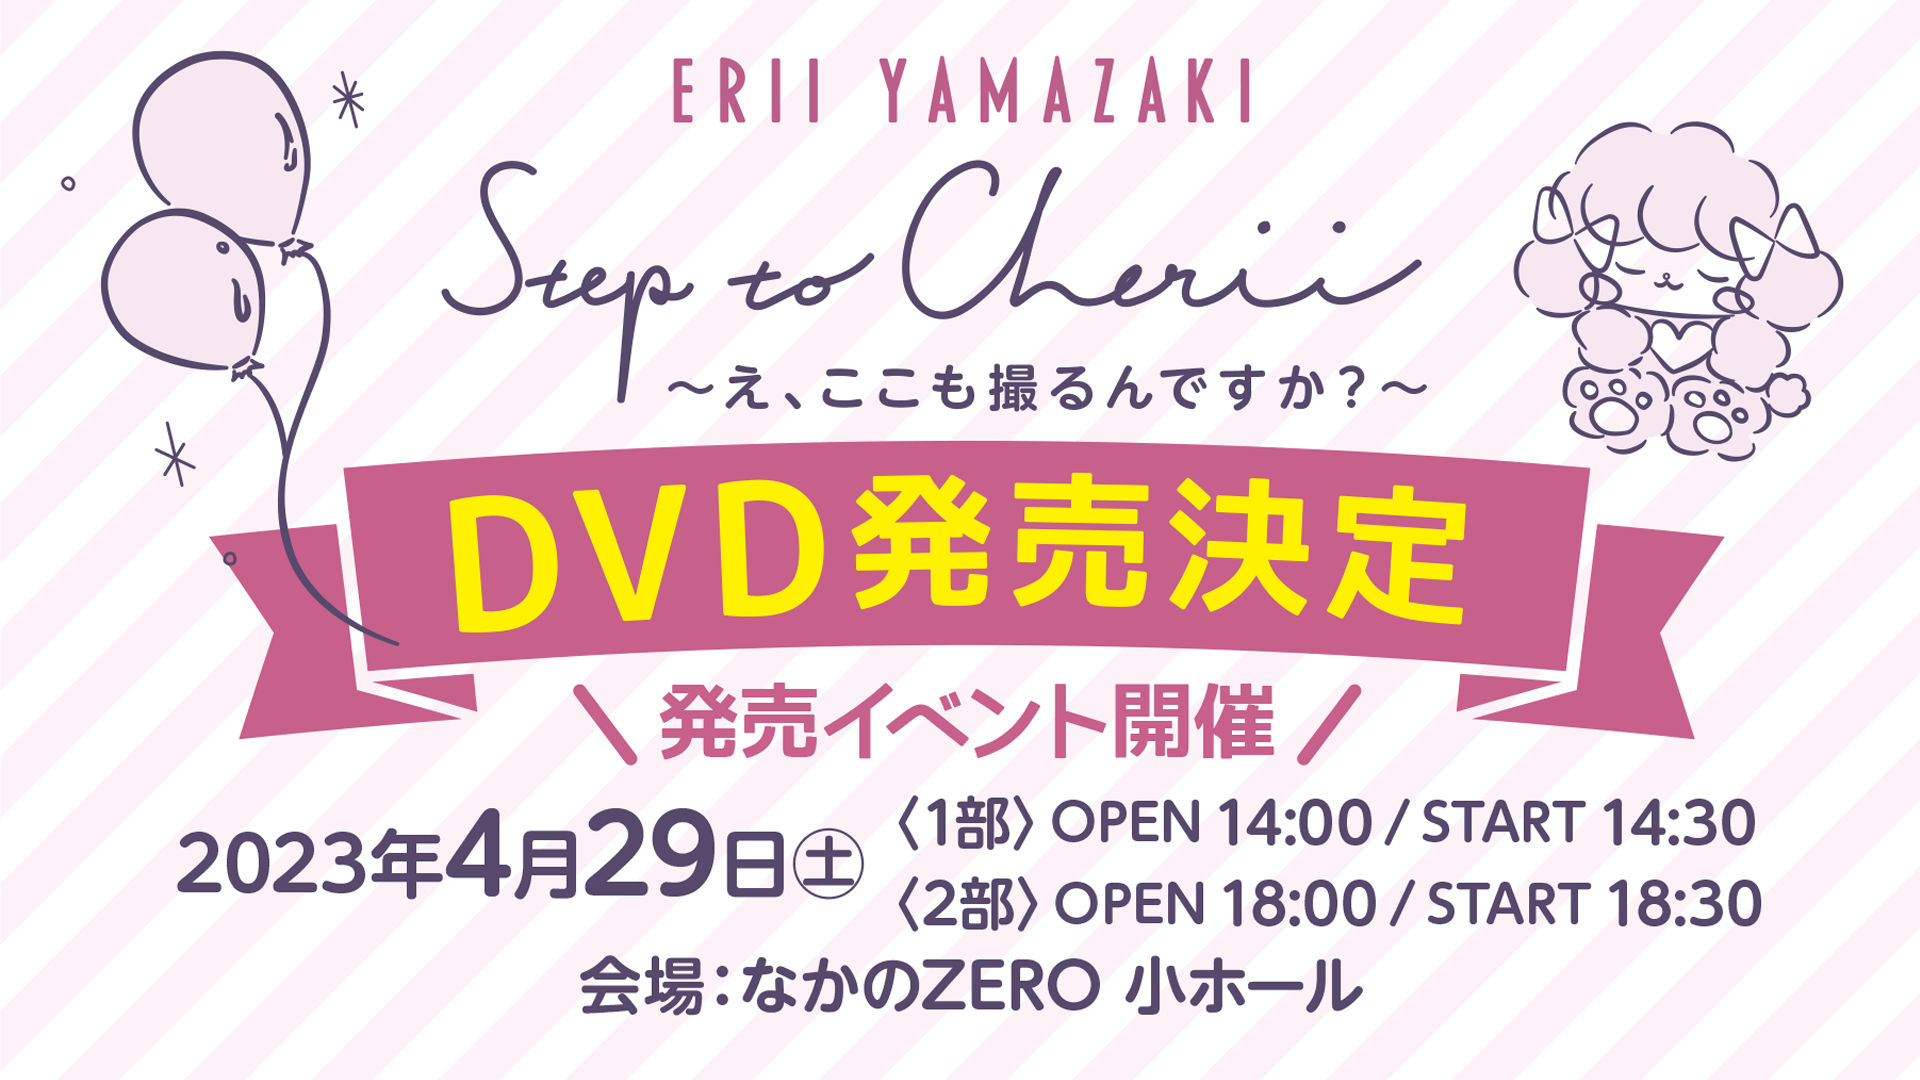 DVD『Step to Cherii ～え、ここも撮るんですか？～』発売決定！4/29 